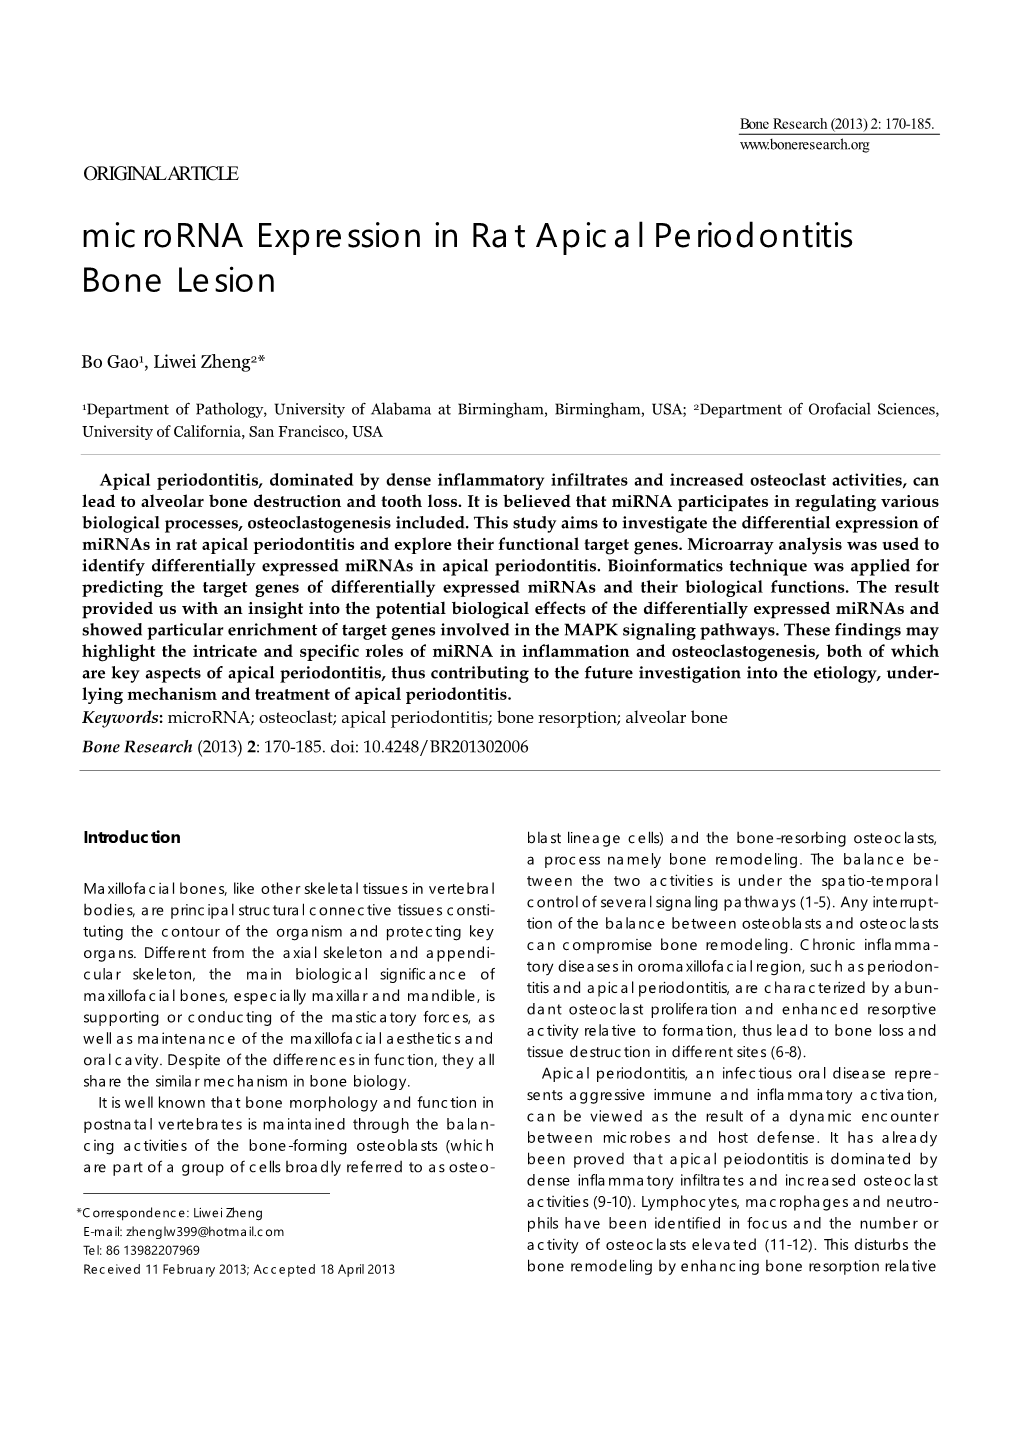 Microrna Expression in Rat Apical Periodontitis Bone Lesion